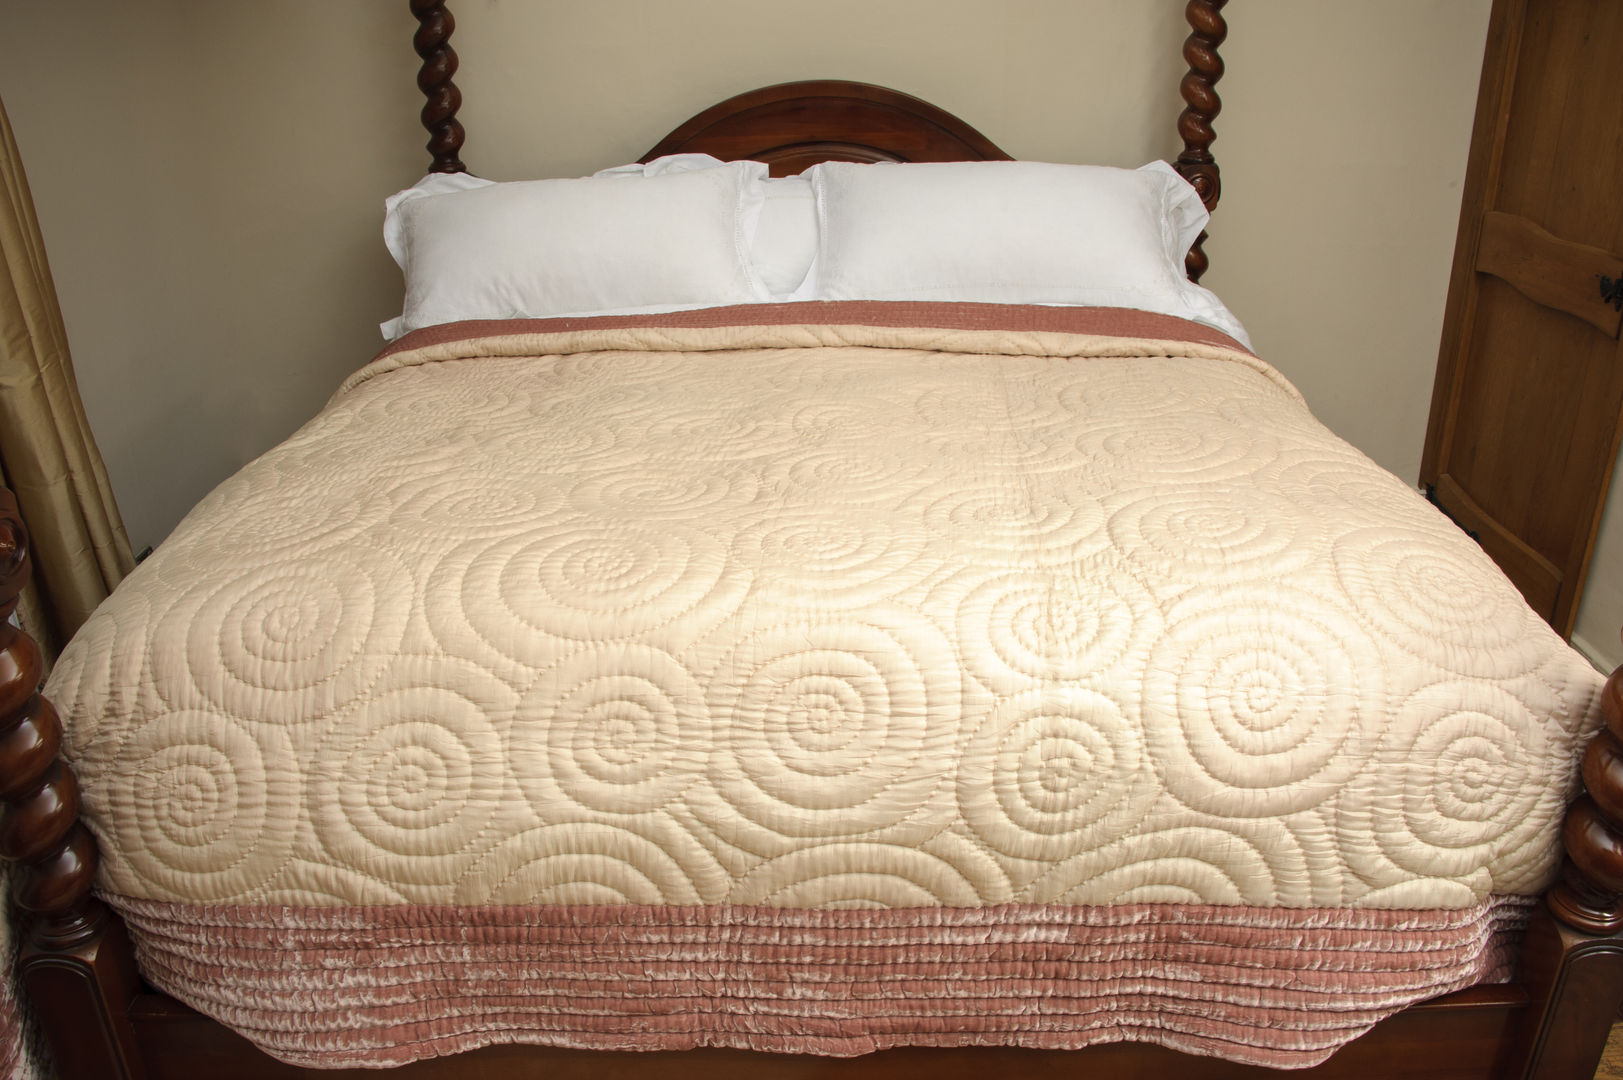 Mulberry Silk and Velvet Quilts, Luella Linen Luella Linen Asian style bedroom Textiles